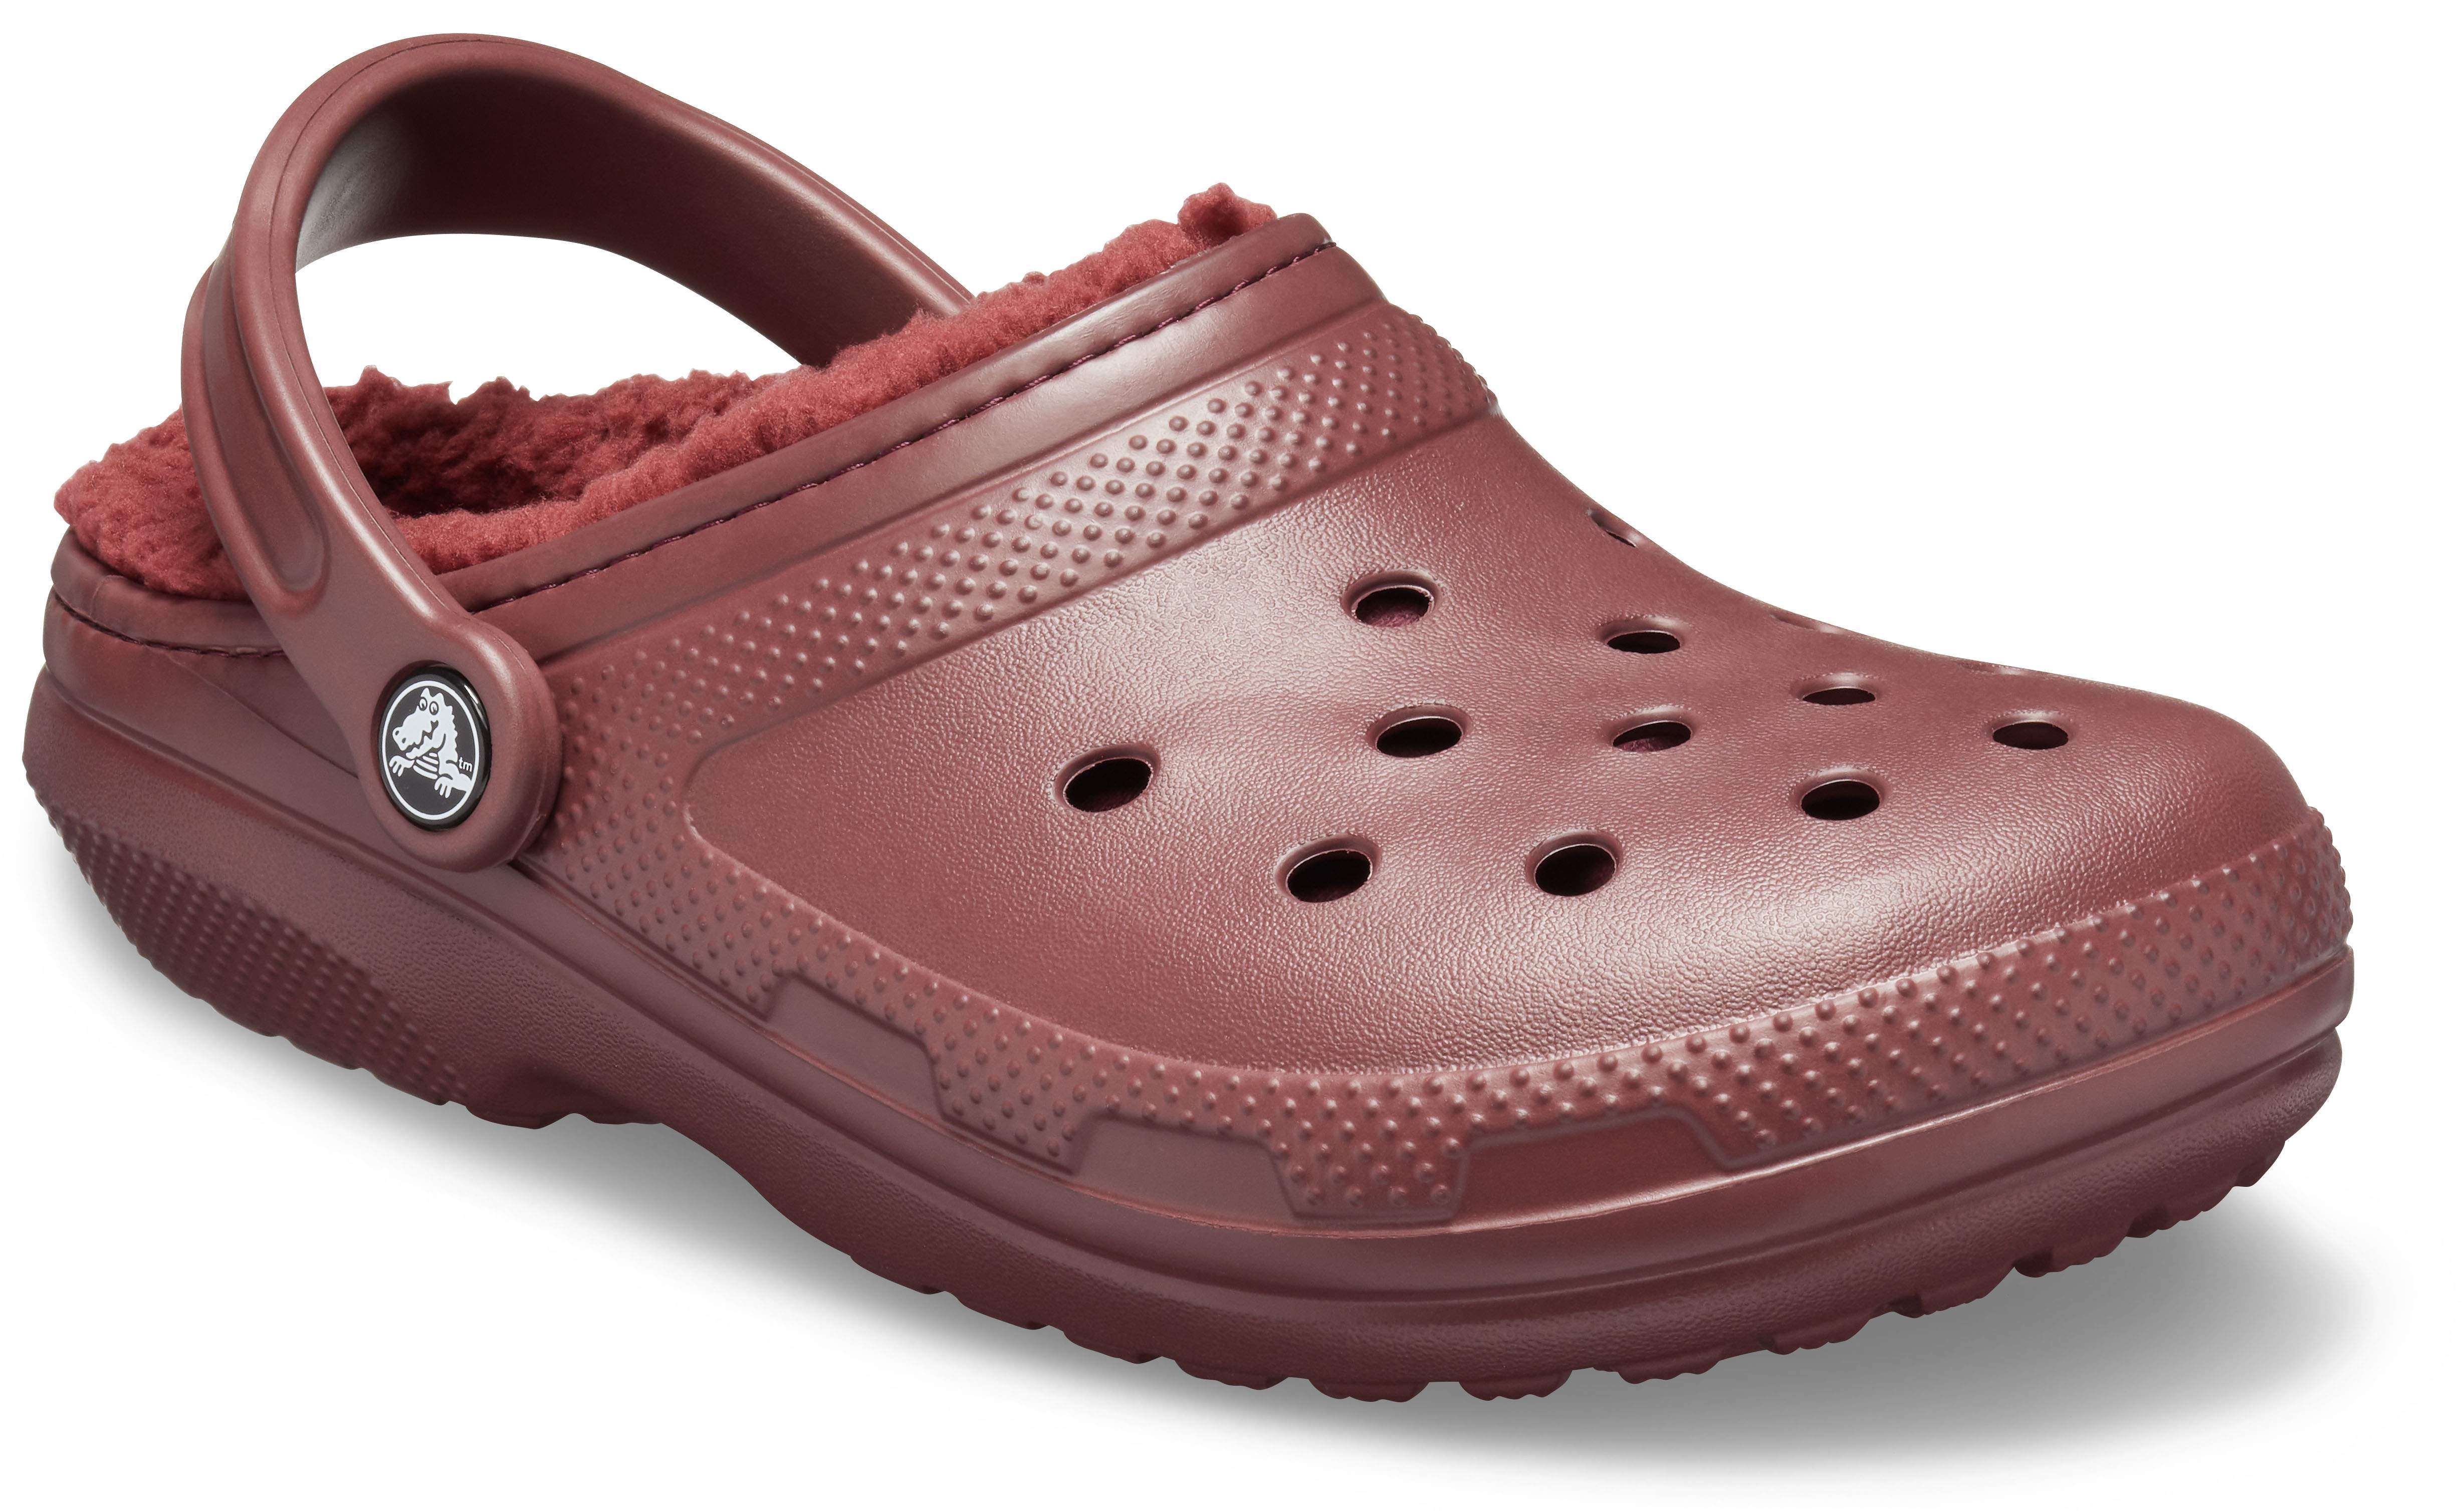 fleece lined croc style shoes